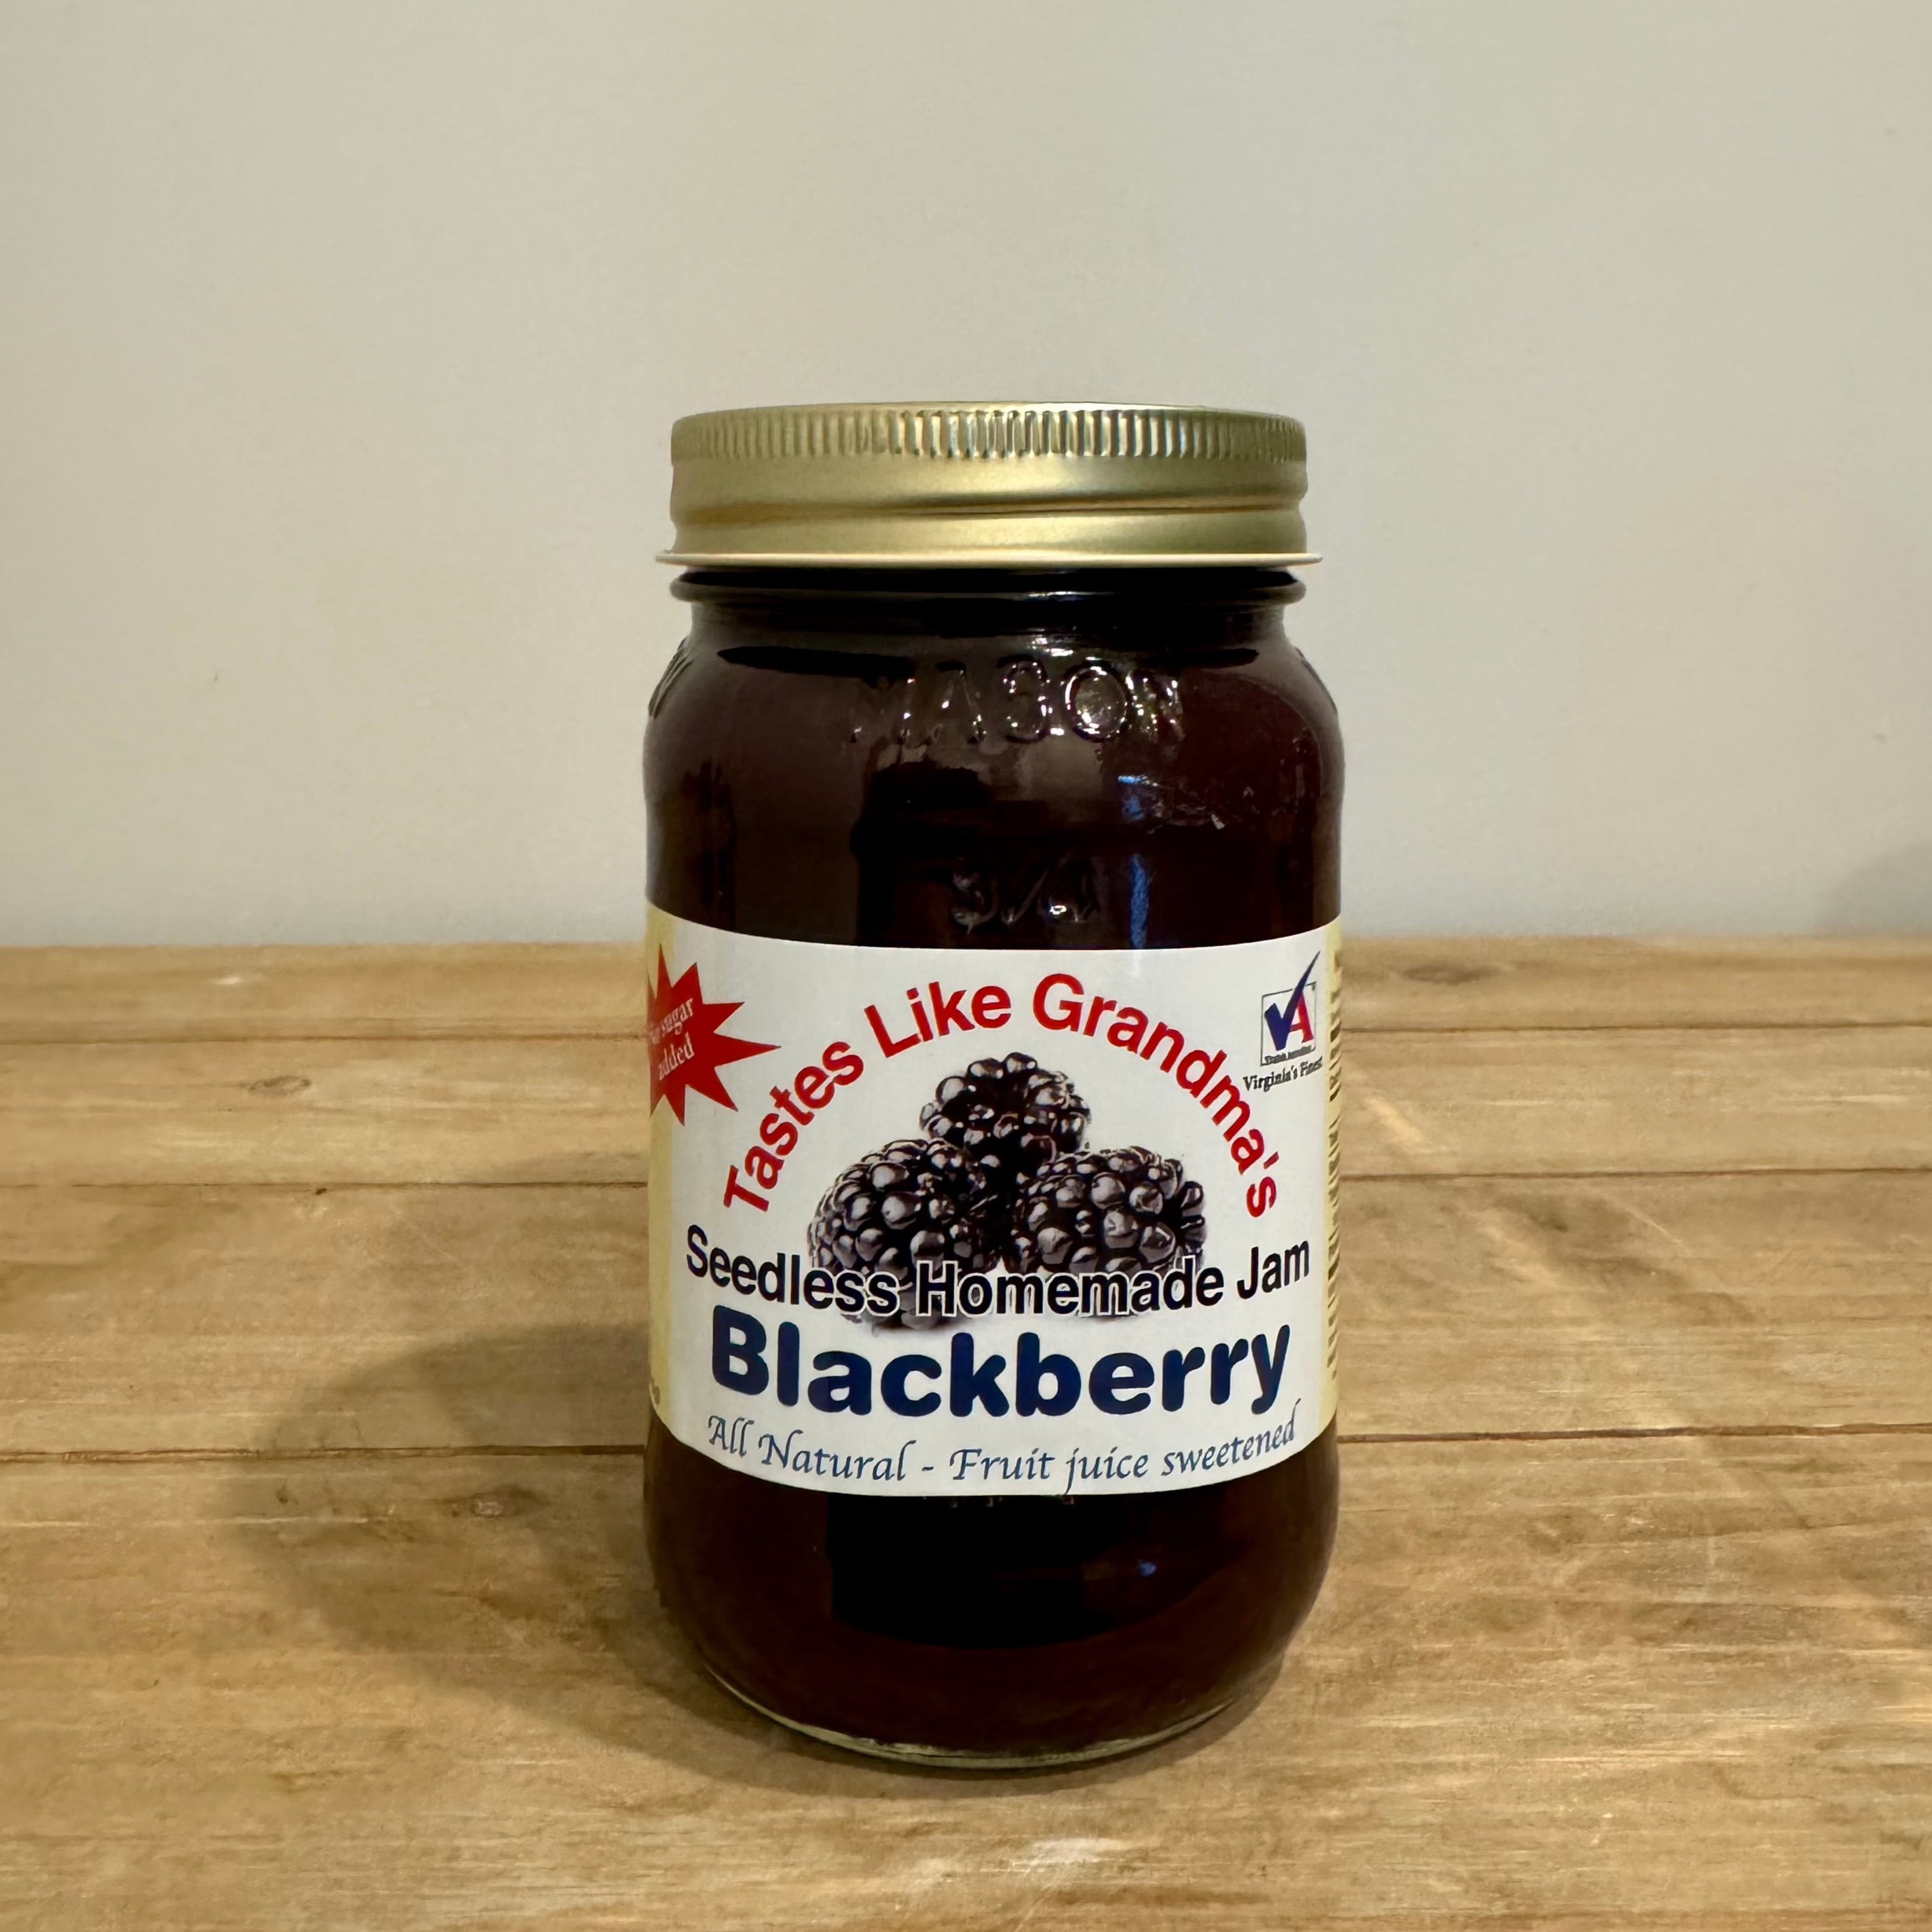 Tastes Like Grandma's Blackberry Seedless Jam.